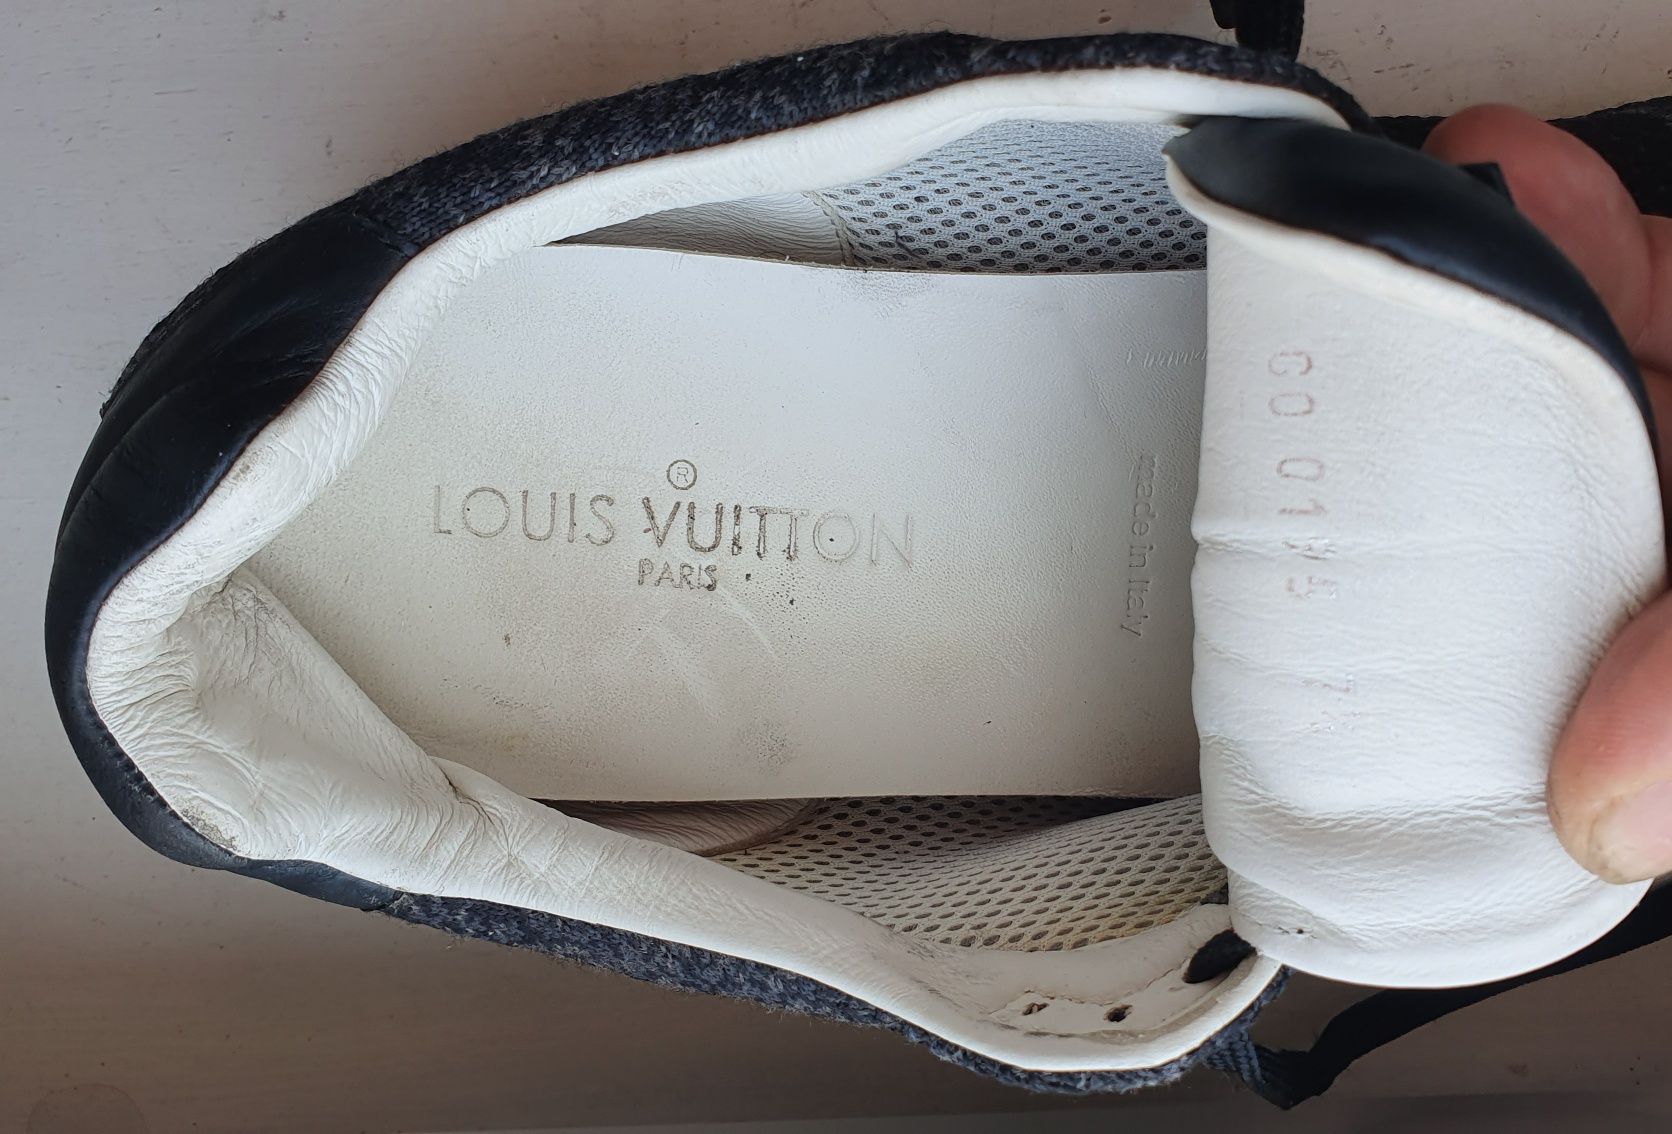 LOUIS VUITTON roz. 7 1/2 41.5 logowane sneakers Premium made in Italy